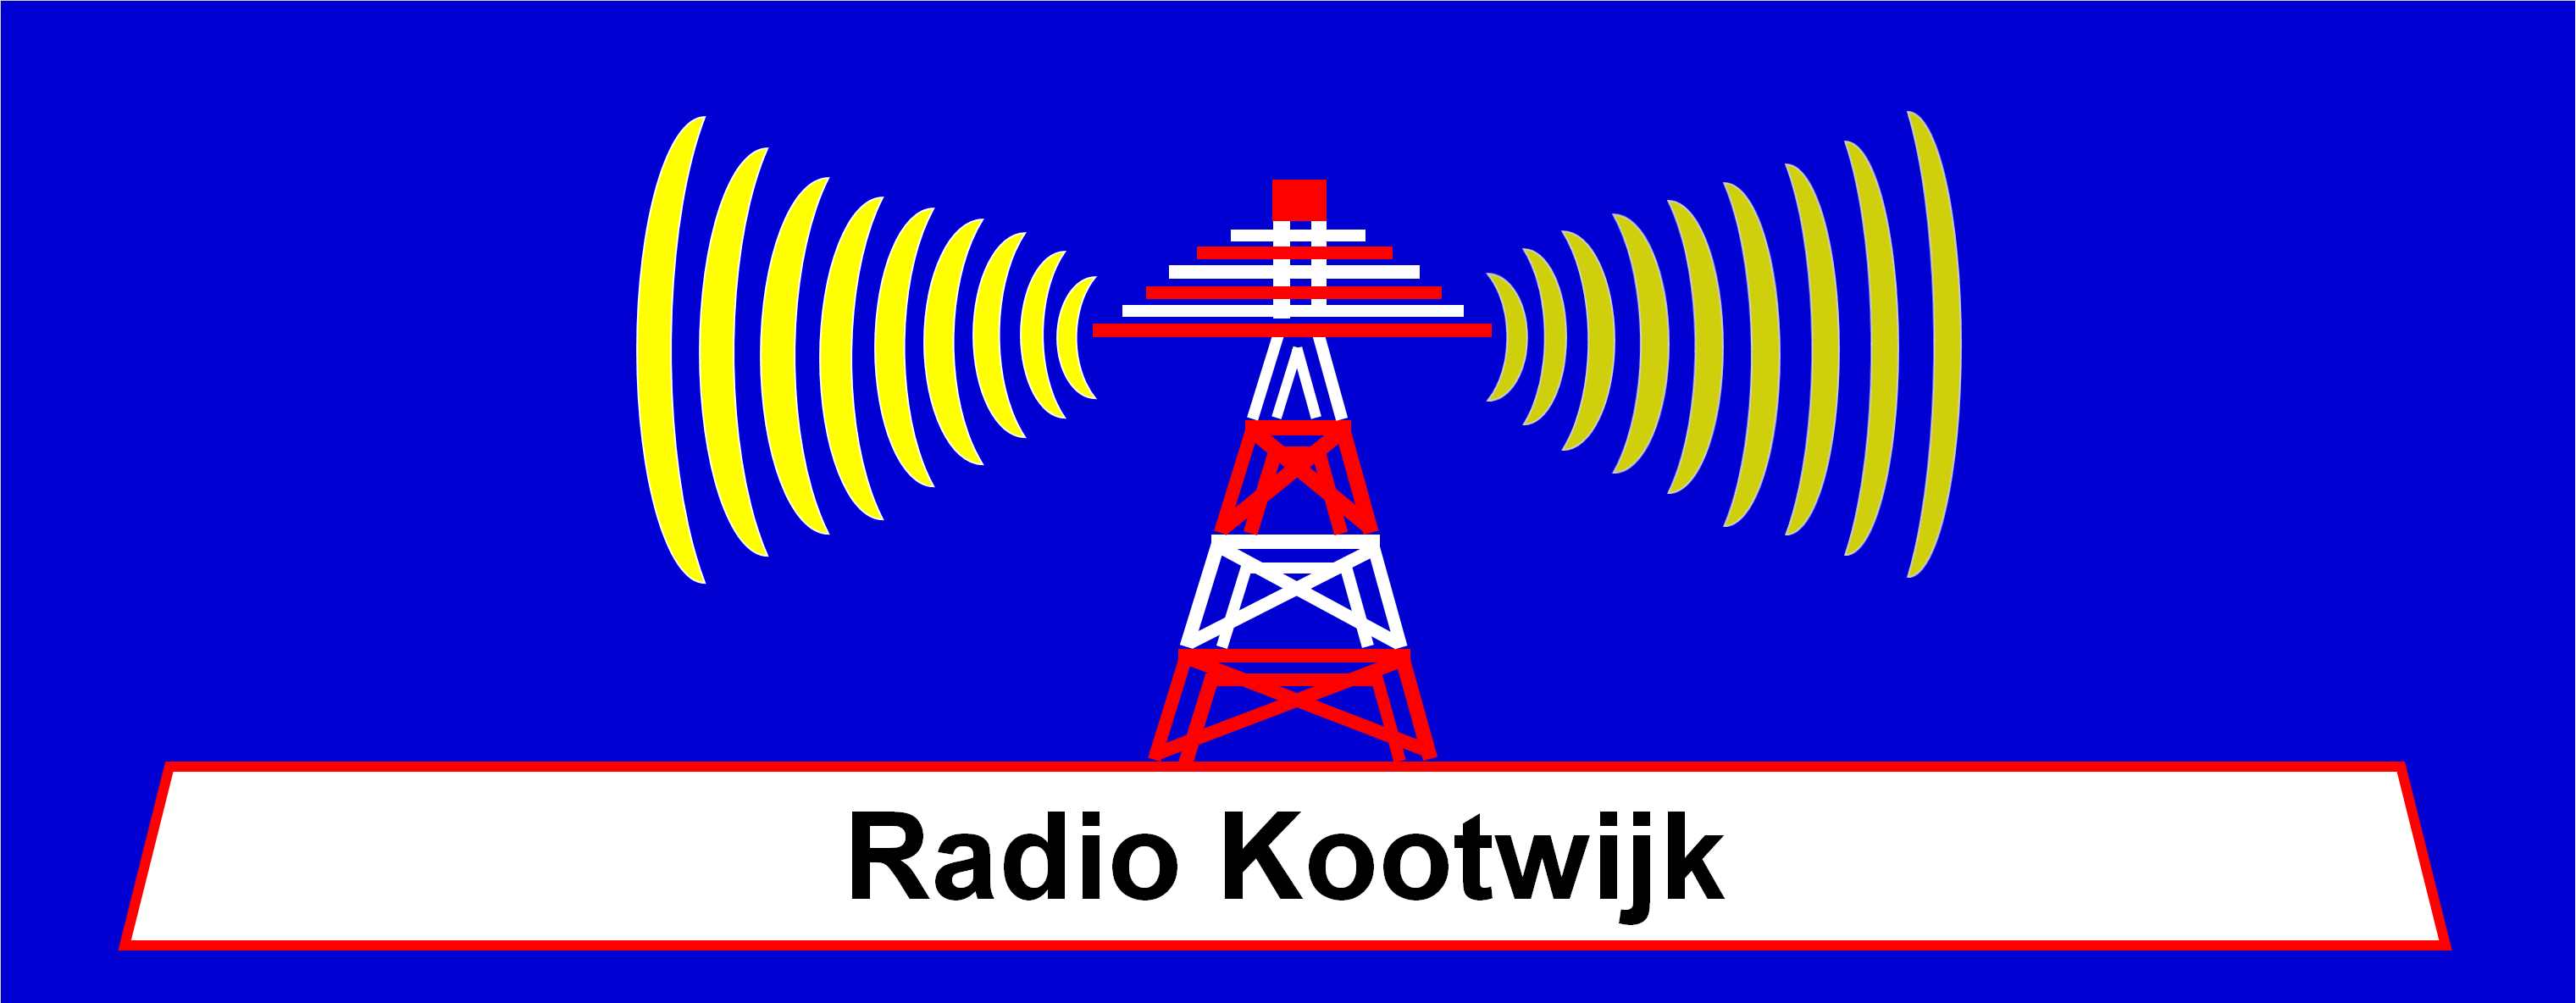 Radio Kootwijk